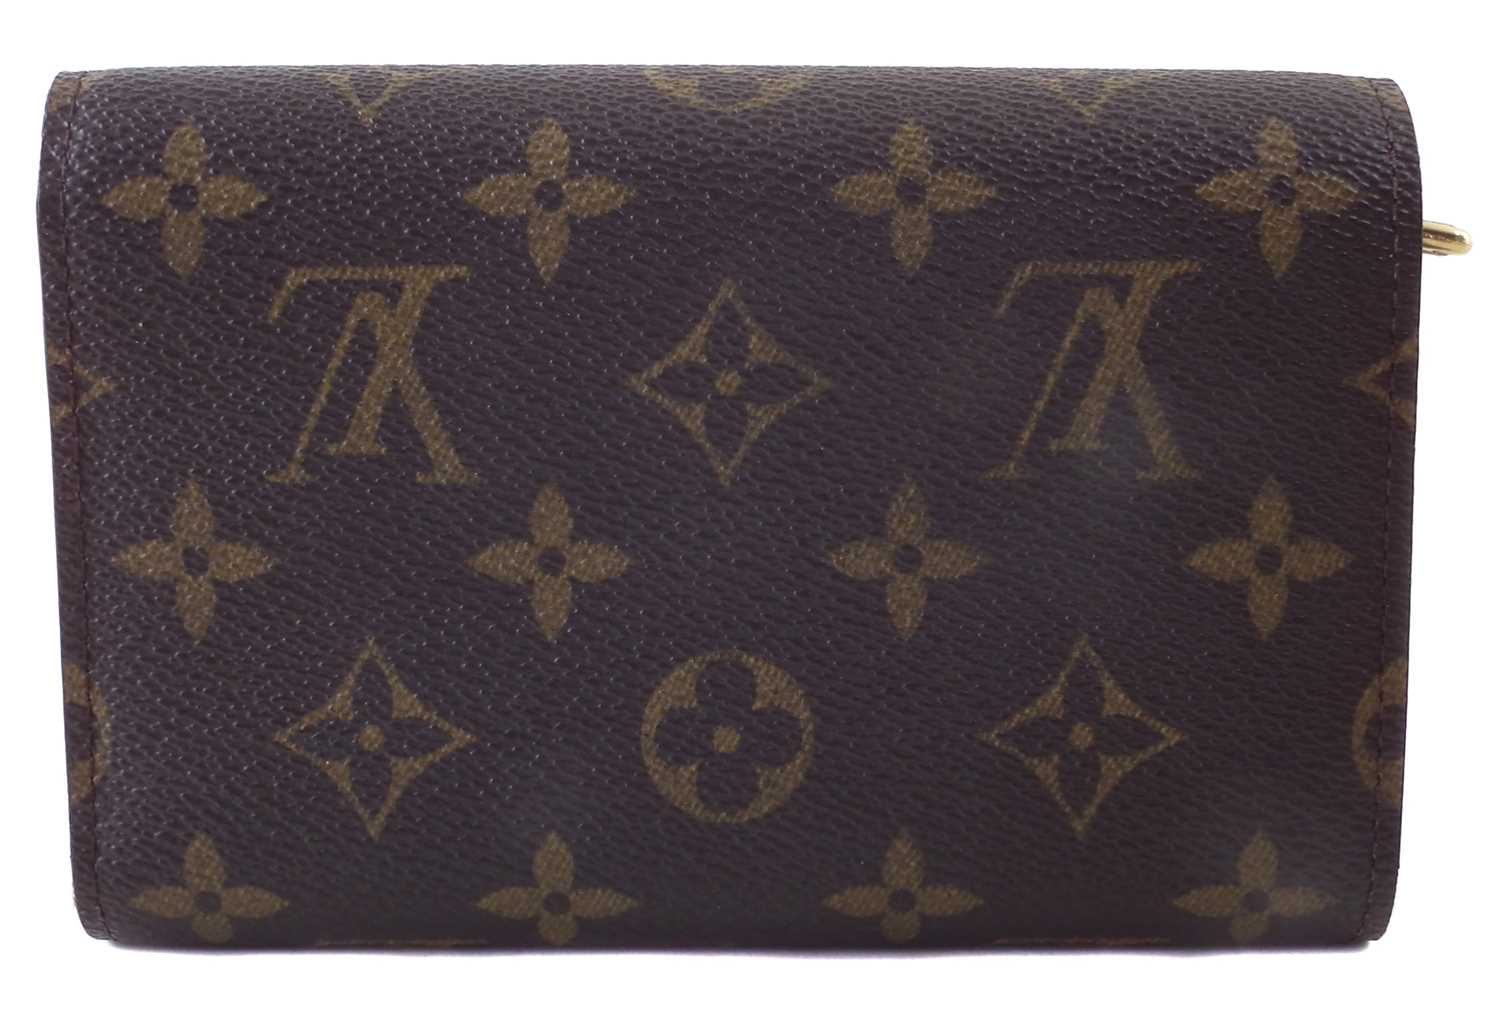 A Louis Vuitton Monogram Trifold Wallet, - Image 2 of 2